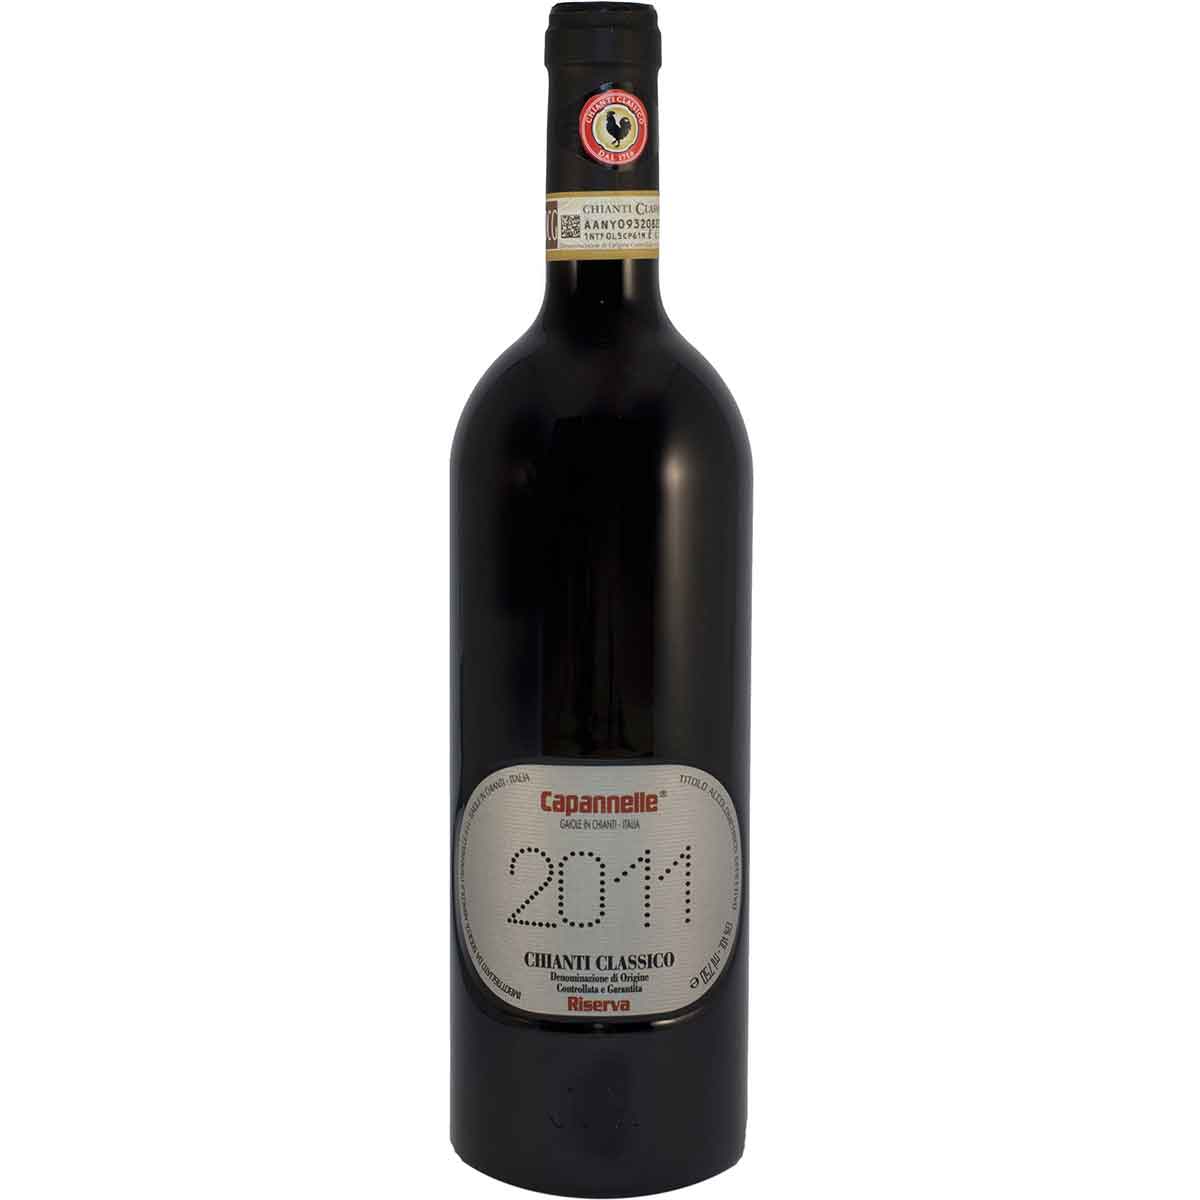 Buy Capannelle Chianti Classico Riserva at Wines Online